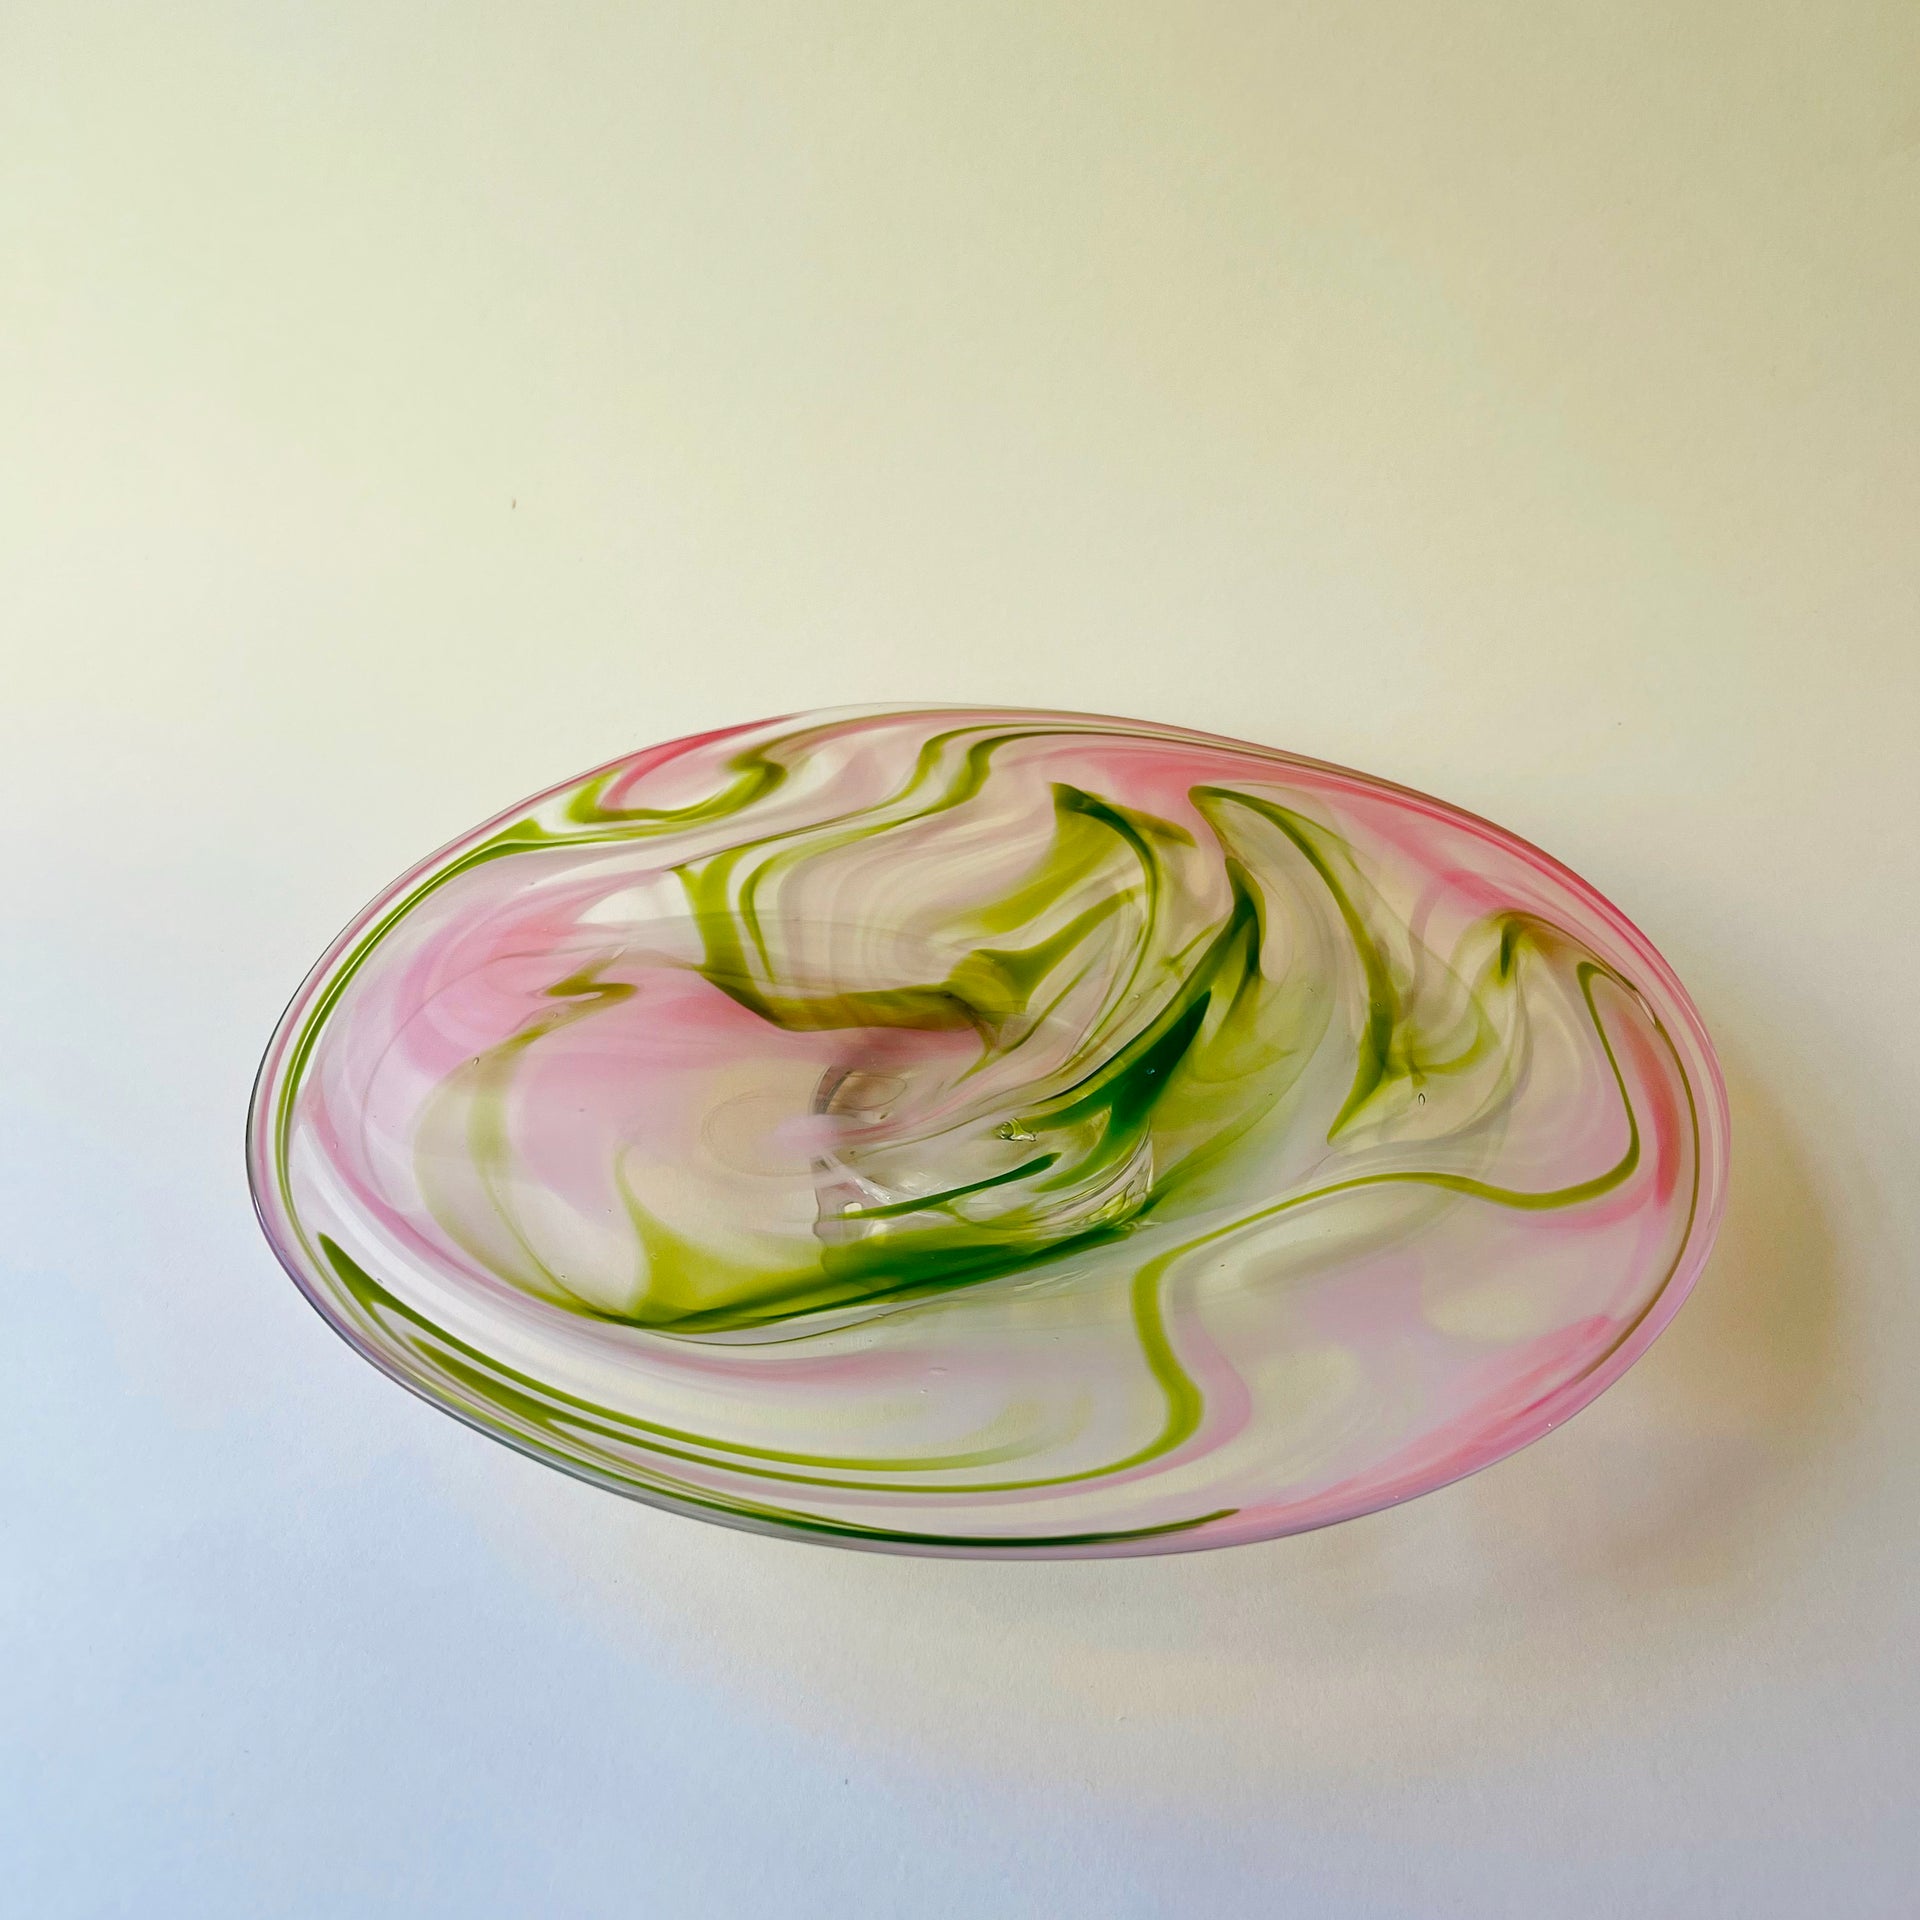 Hand-Blown Glass Platter In Watermelon